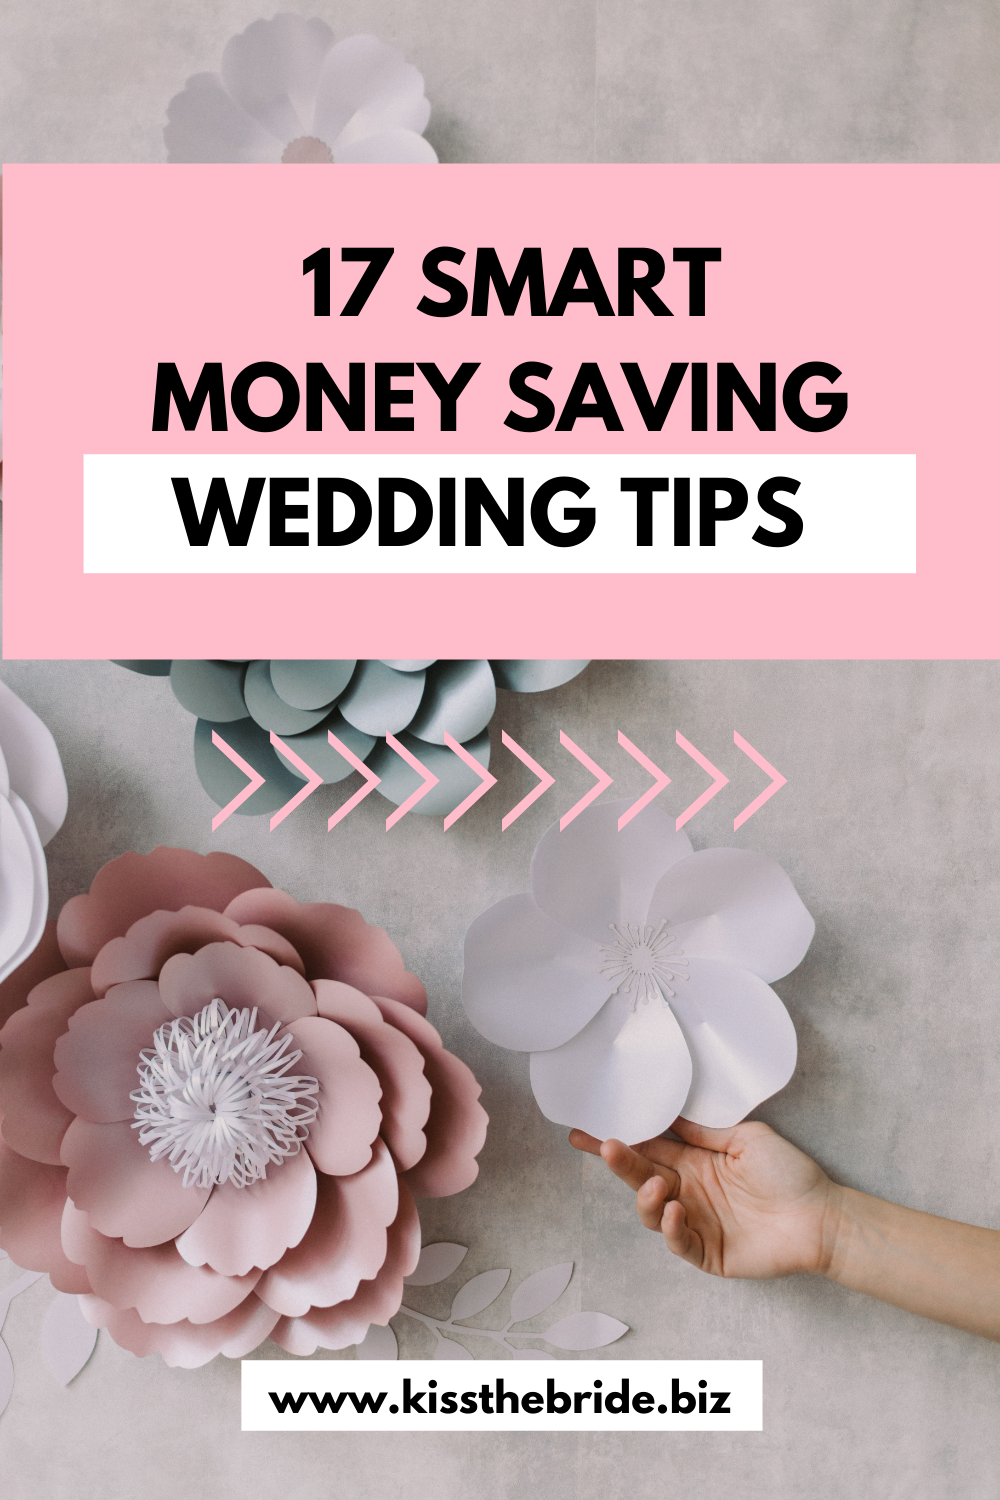 Money saving wedding tips 